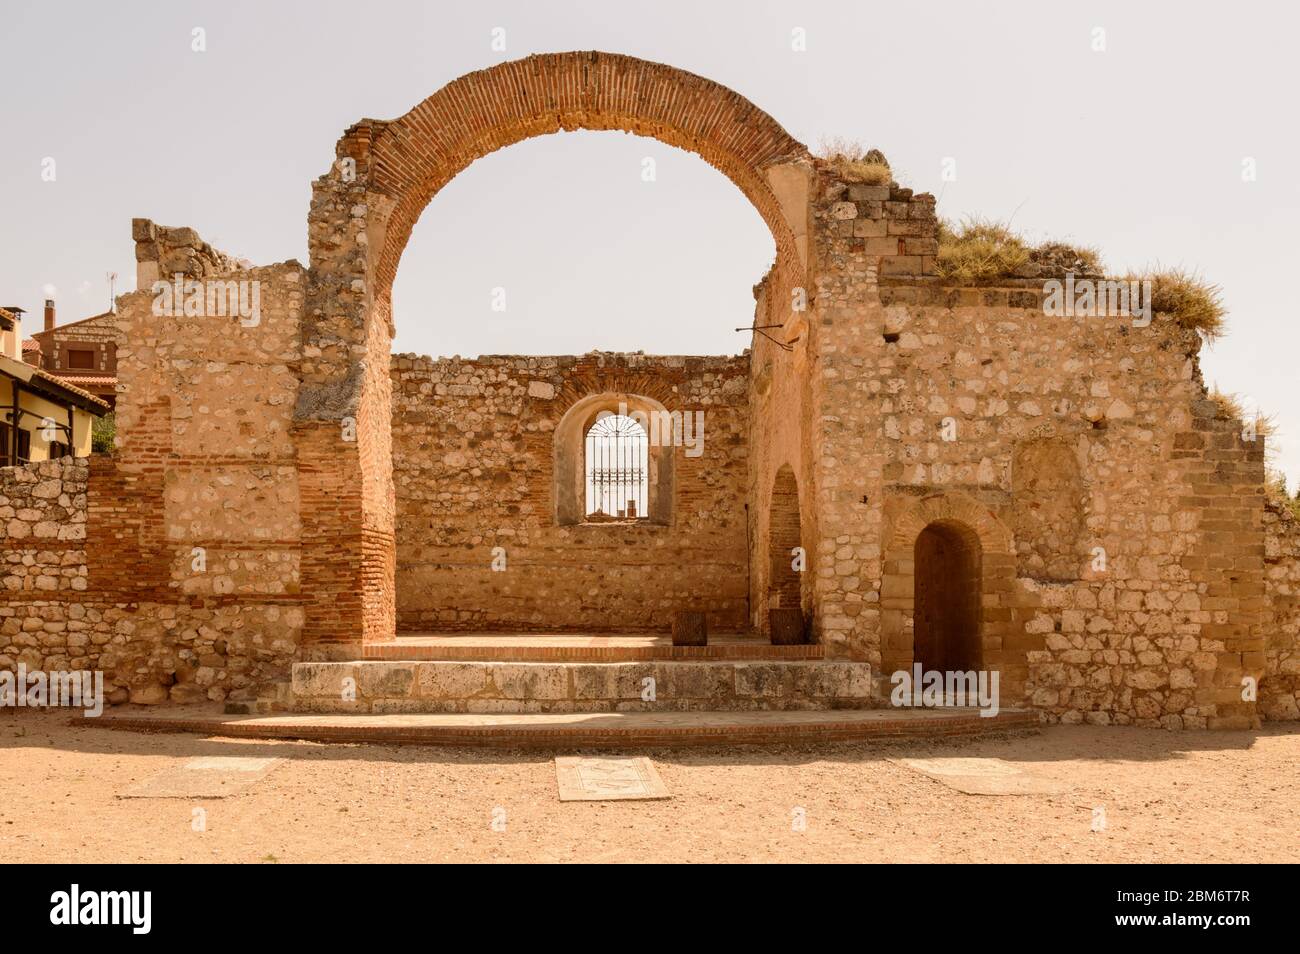 High Altar Of The Church Of Saint Peter In Ruins In Hita. July 23, 2019. Hita Guadalajara Castilla La Mancha. Spain. Travel Tourism Holidays Stock Photo